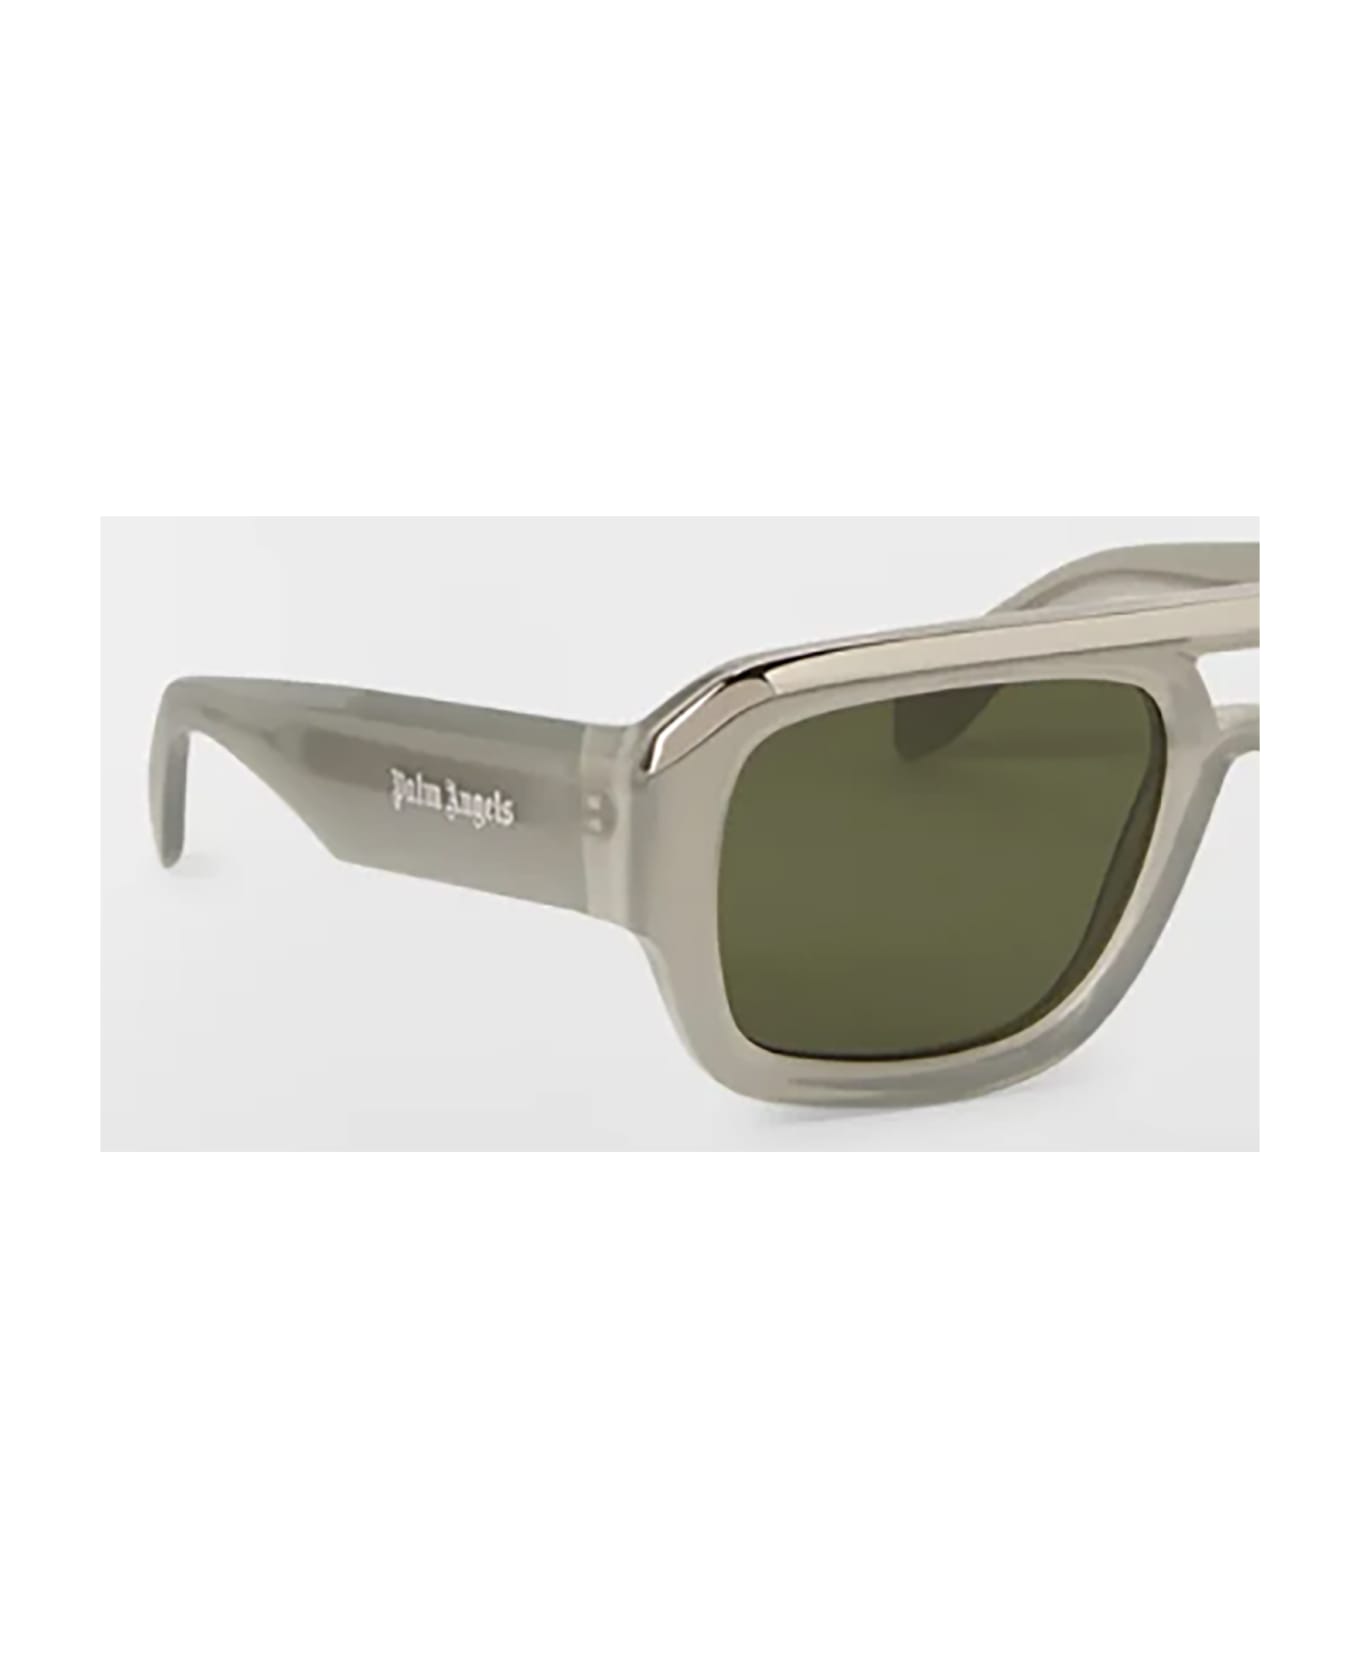 Palm Angels PERI062 STOCKTON Sunglasses - Grey